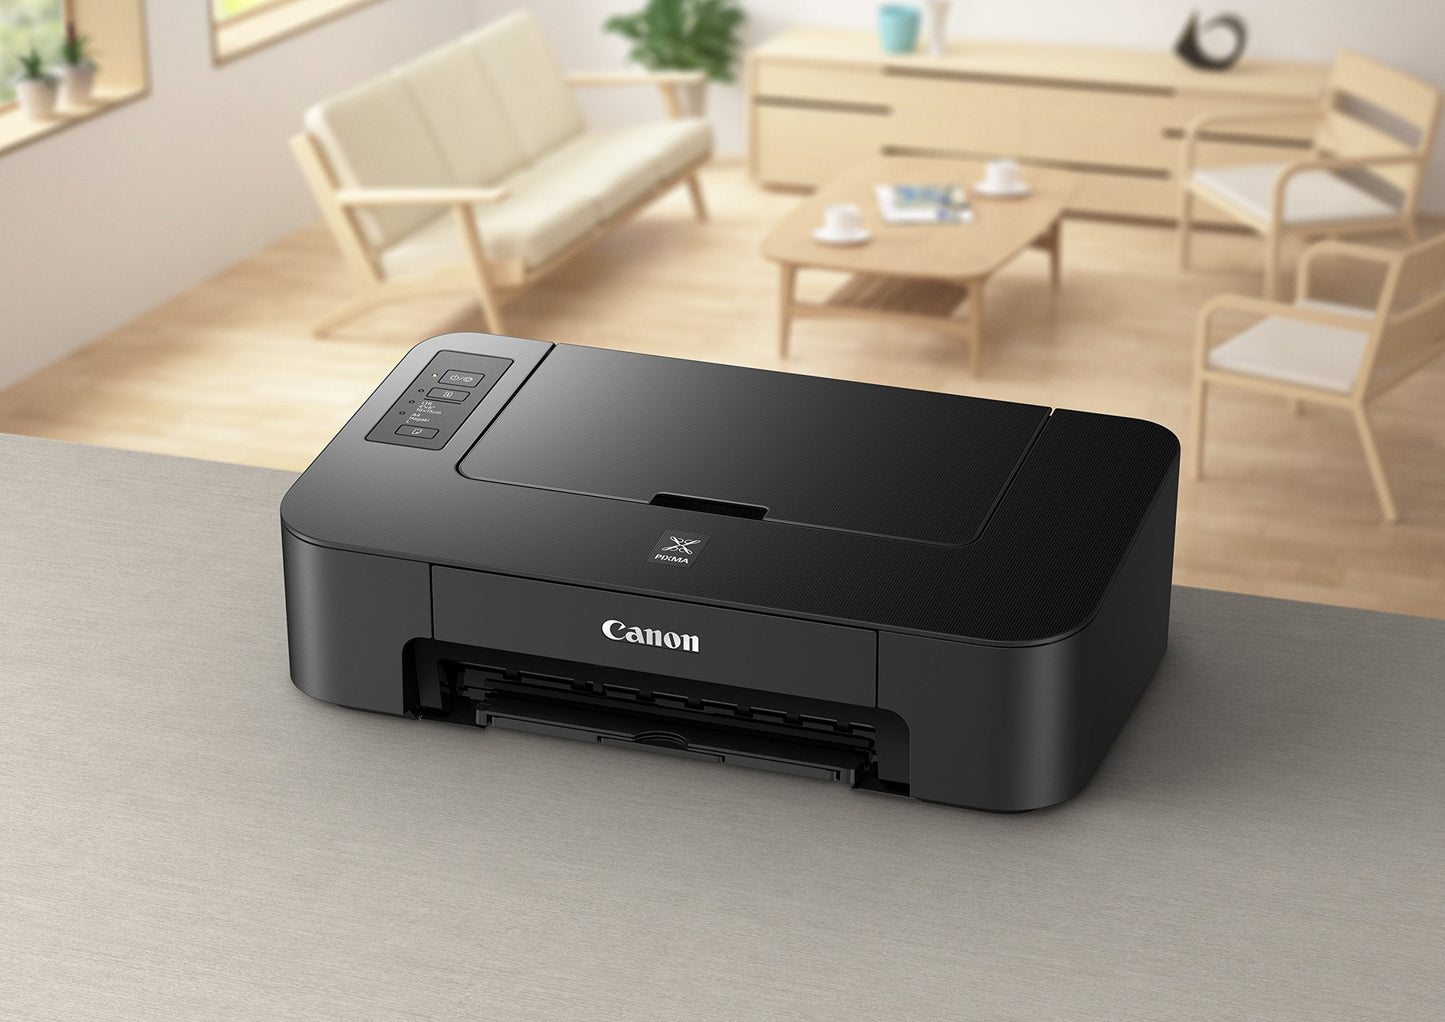 Canon PIXMA TS205 Inkjet Printer Colour Printer with USB Connectivity